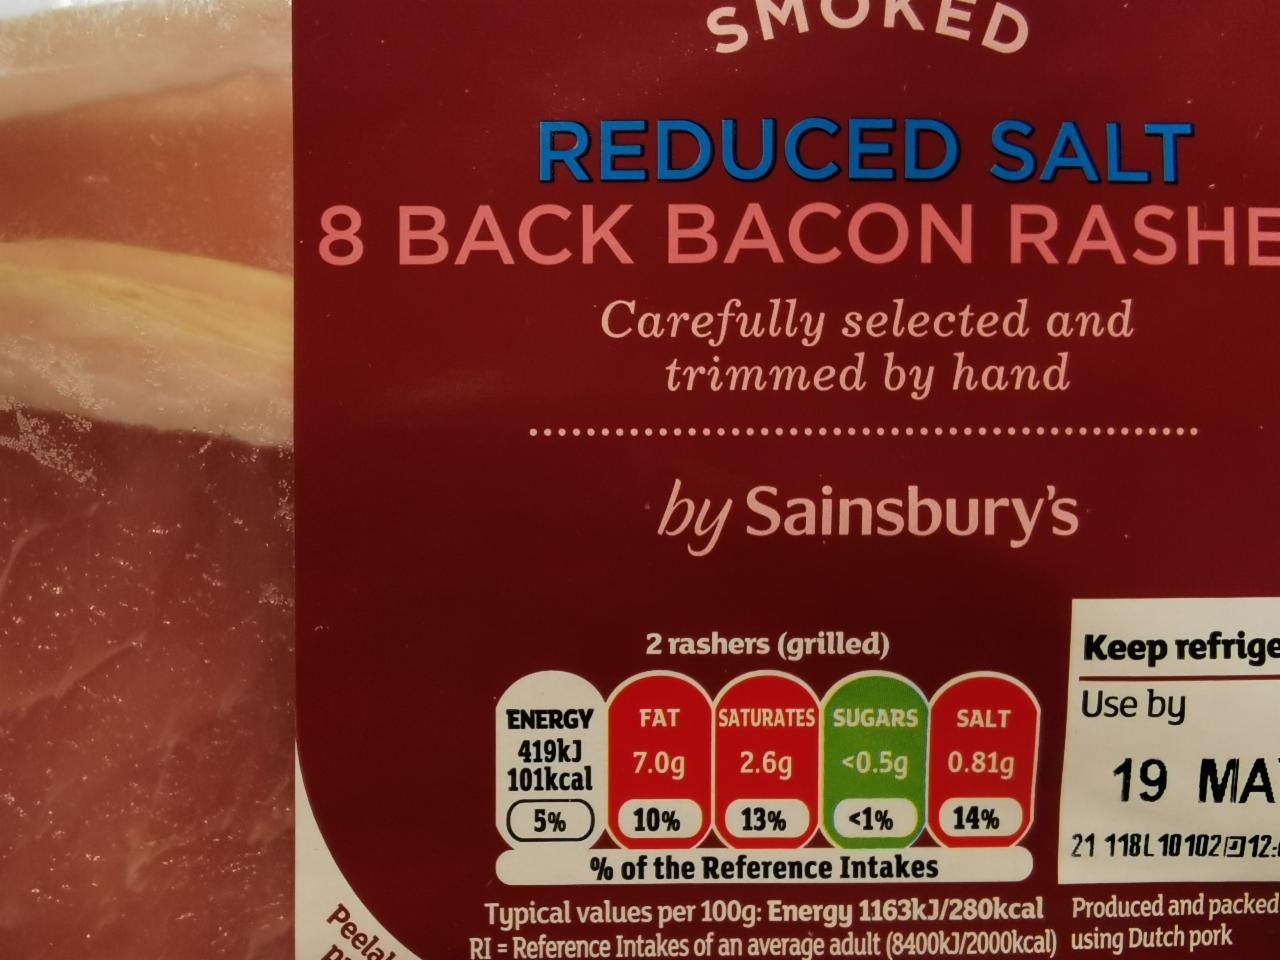 Fotografie - 8 Smoked Back Bacon Rashers by Sainsbury's Reduced Salt